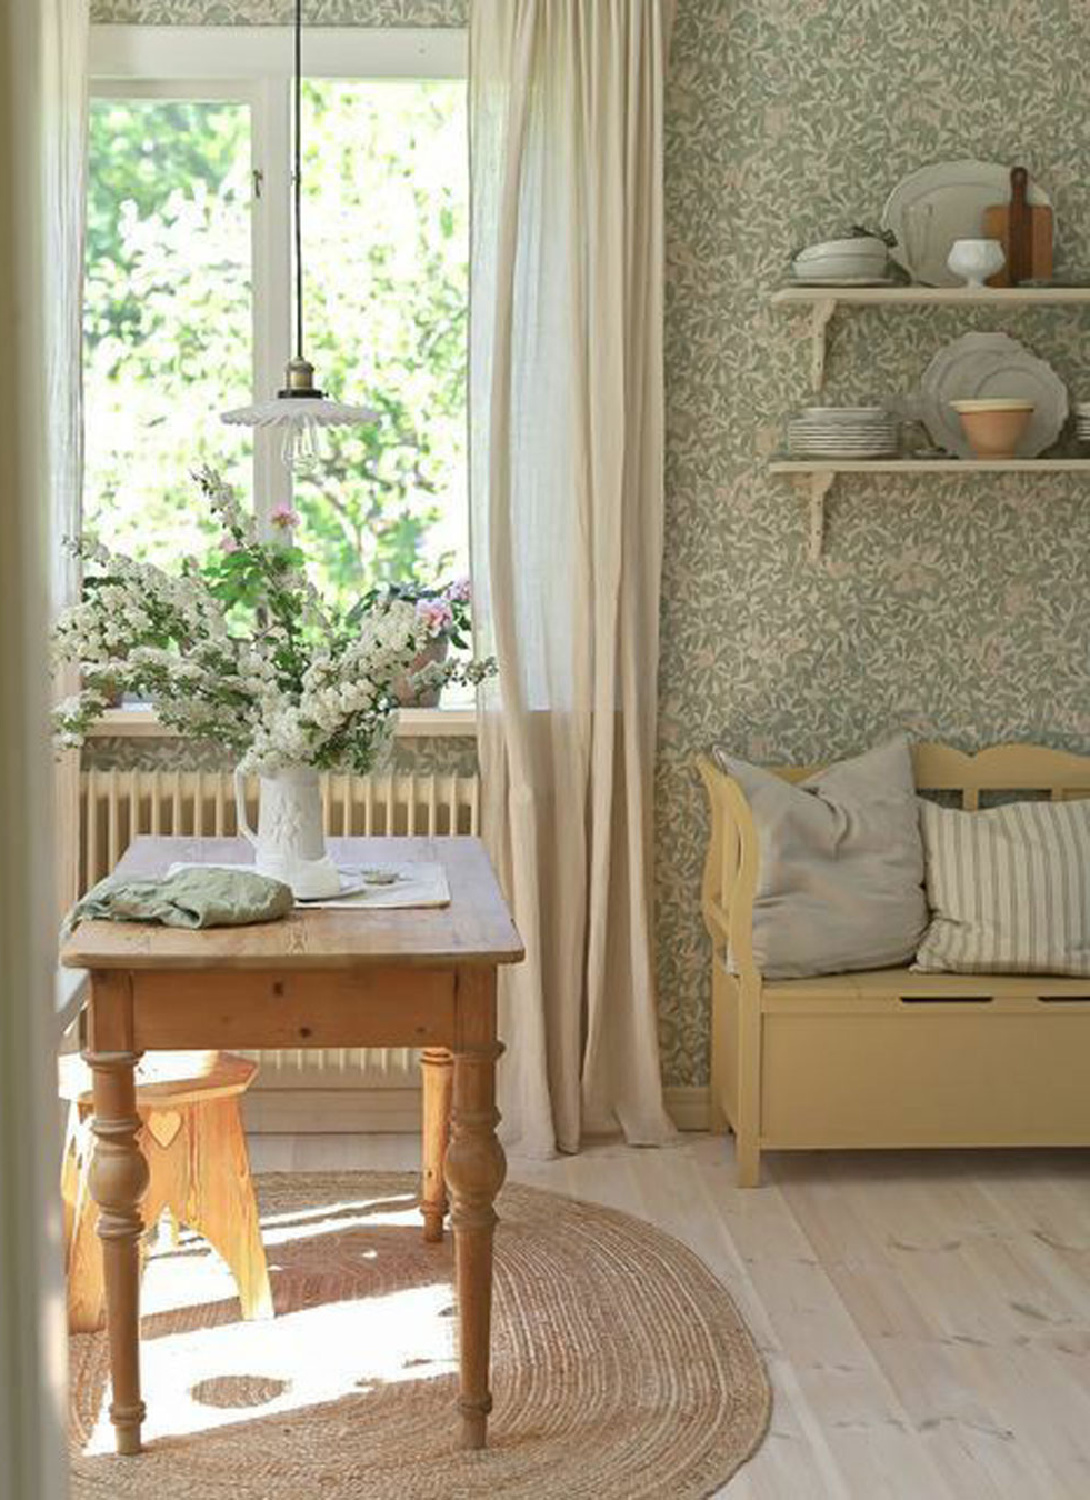 Cozy European country cottage kitchen with romantic vintage details - via Gustavienne. #cozykitchens #europeancottage